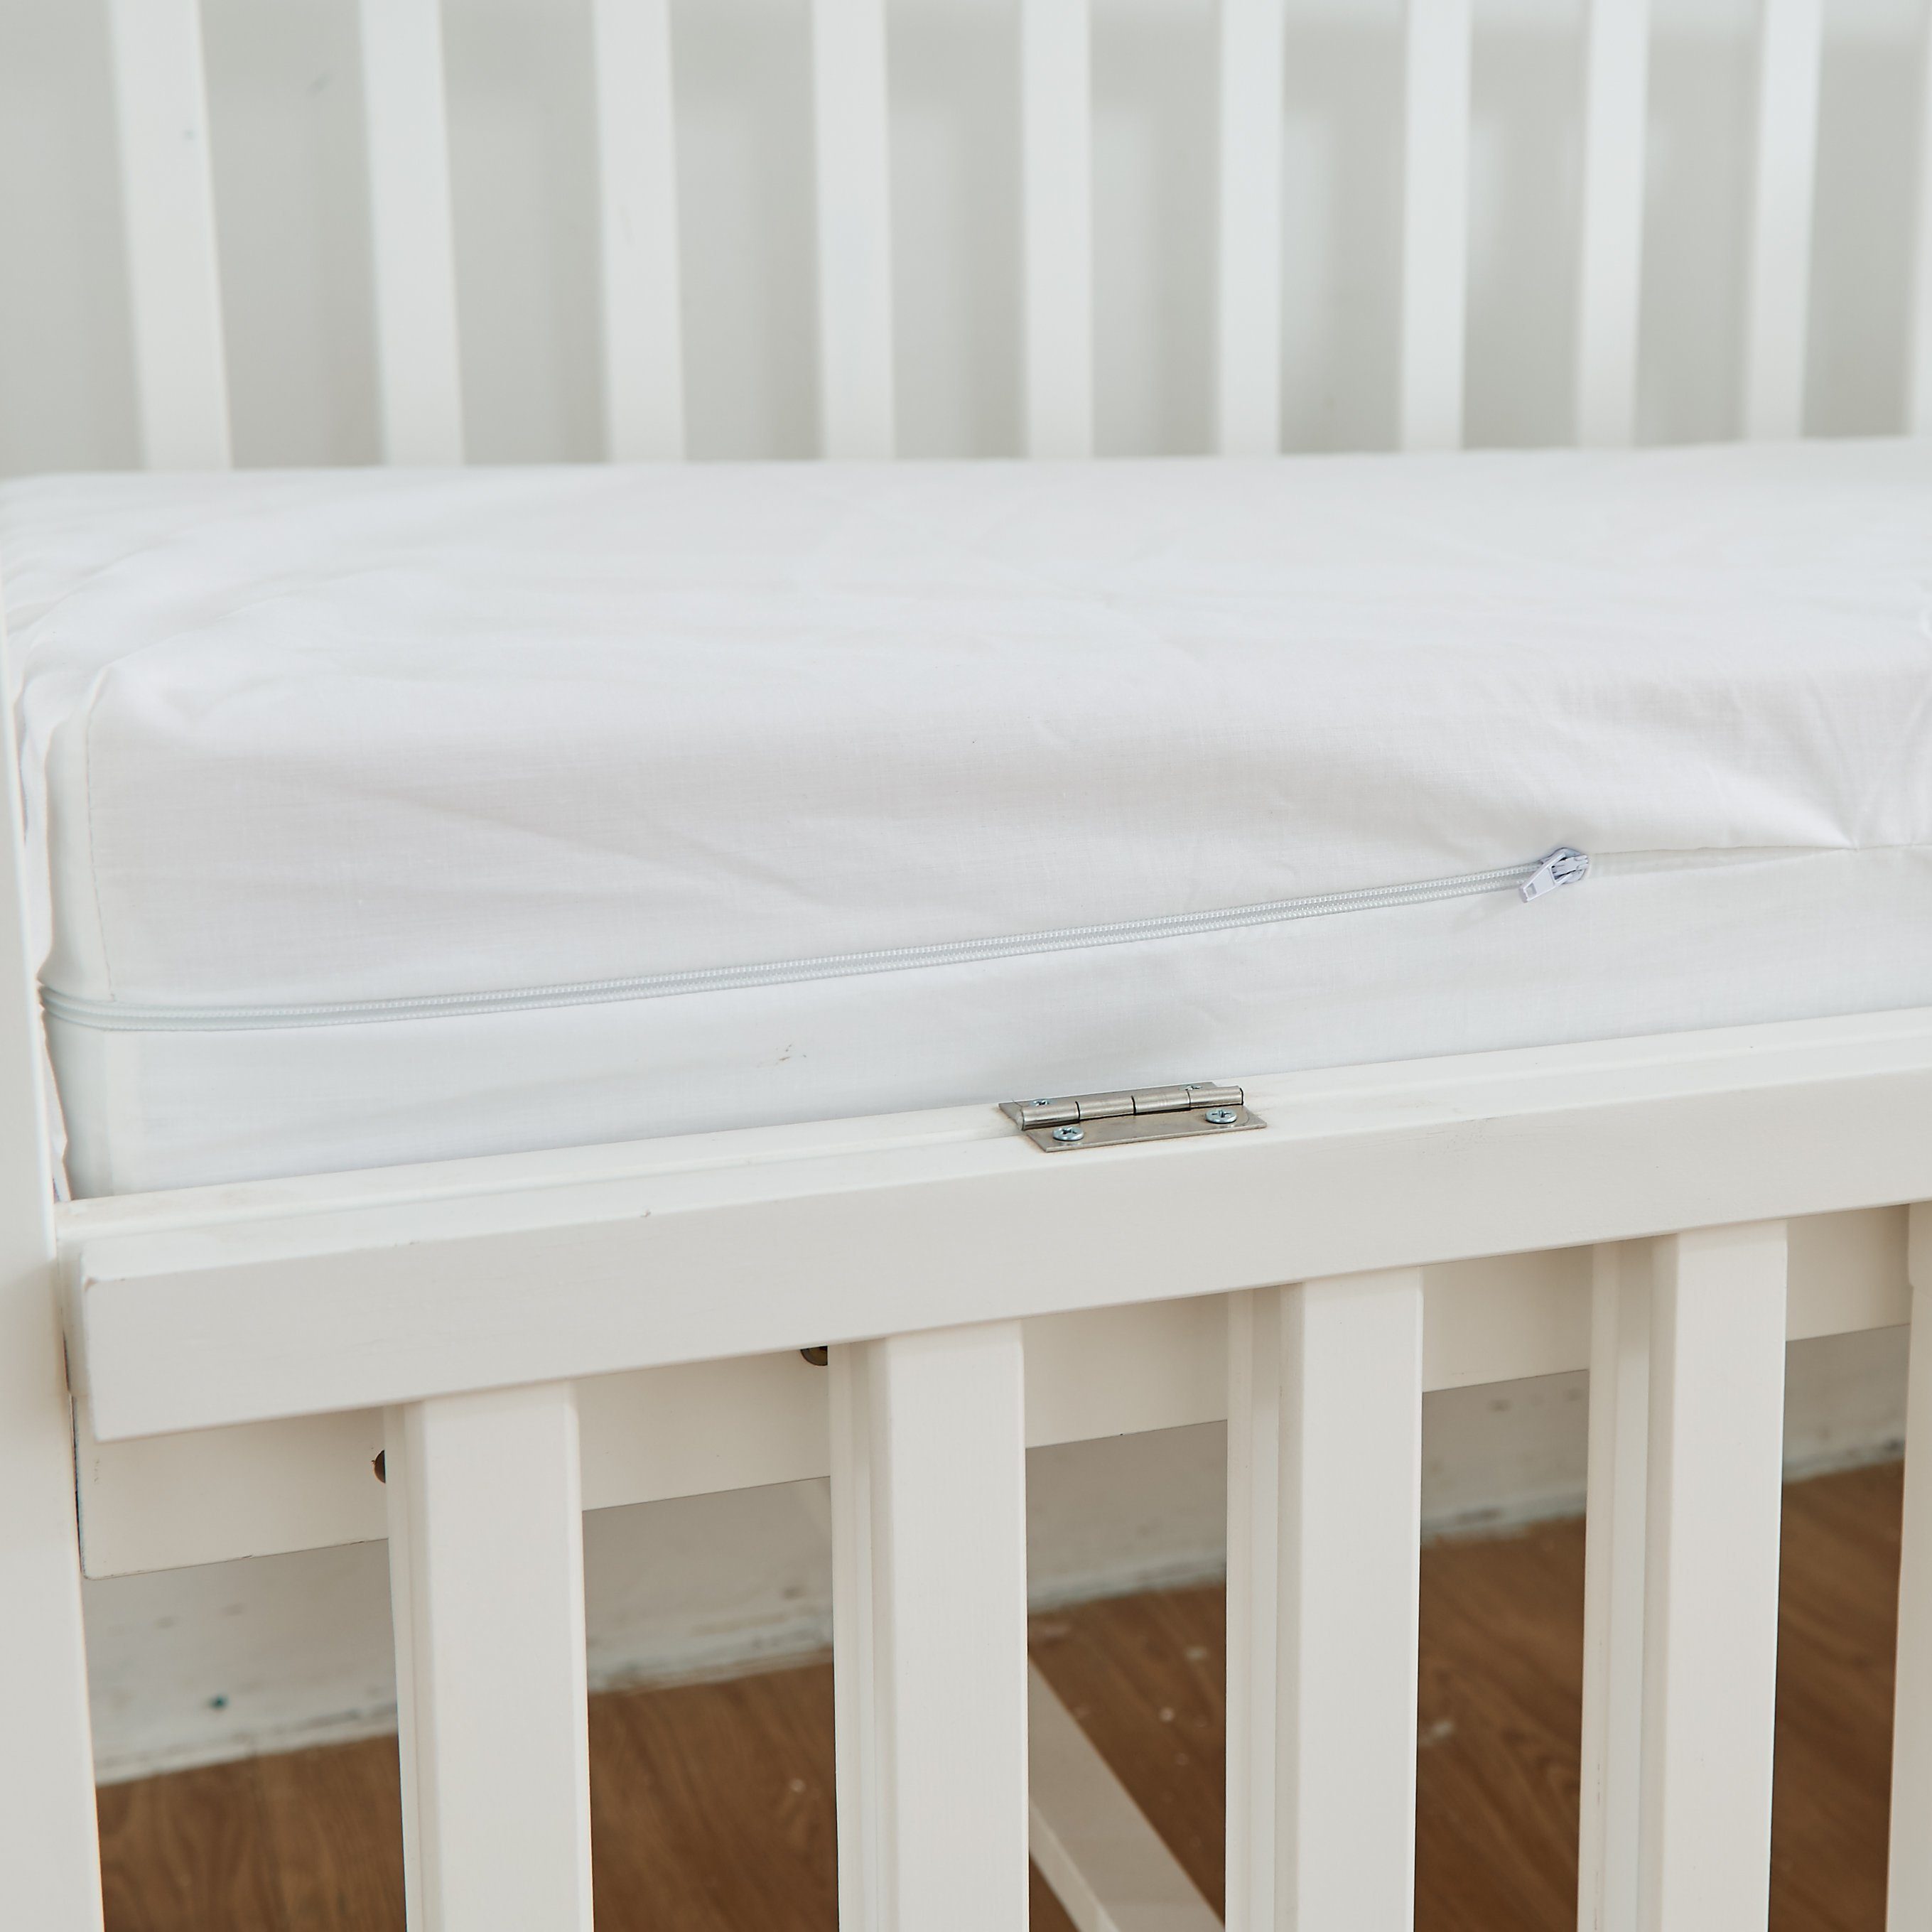 Zippered Baby Crib Bassinet Mattress Sheets / Covers Zippered Crib Mattress Protector Bargoose Home Textiles, Inc. 